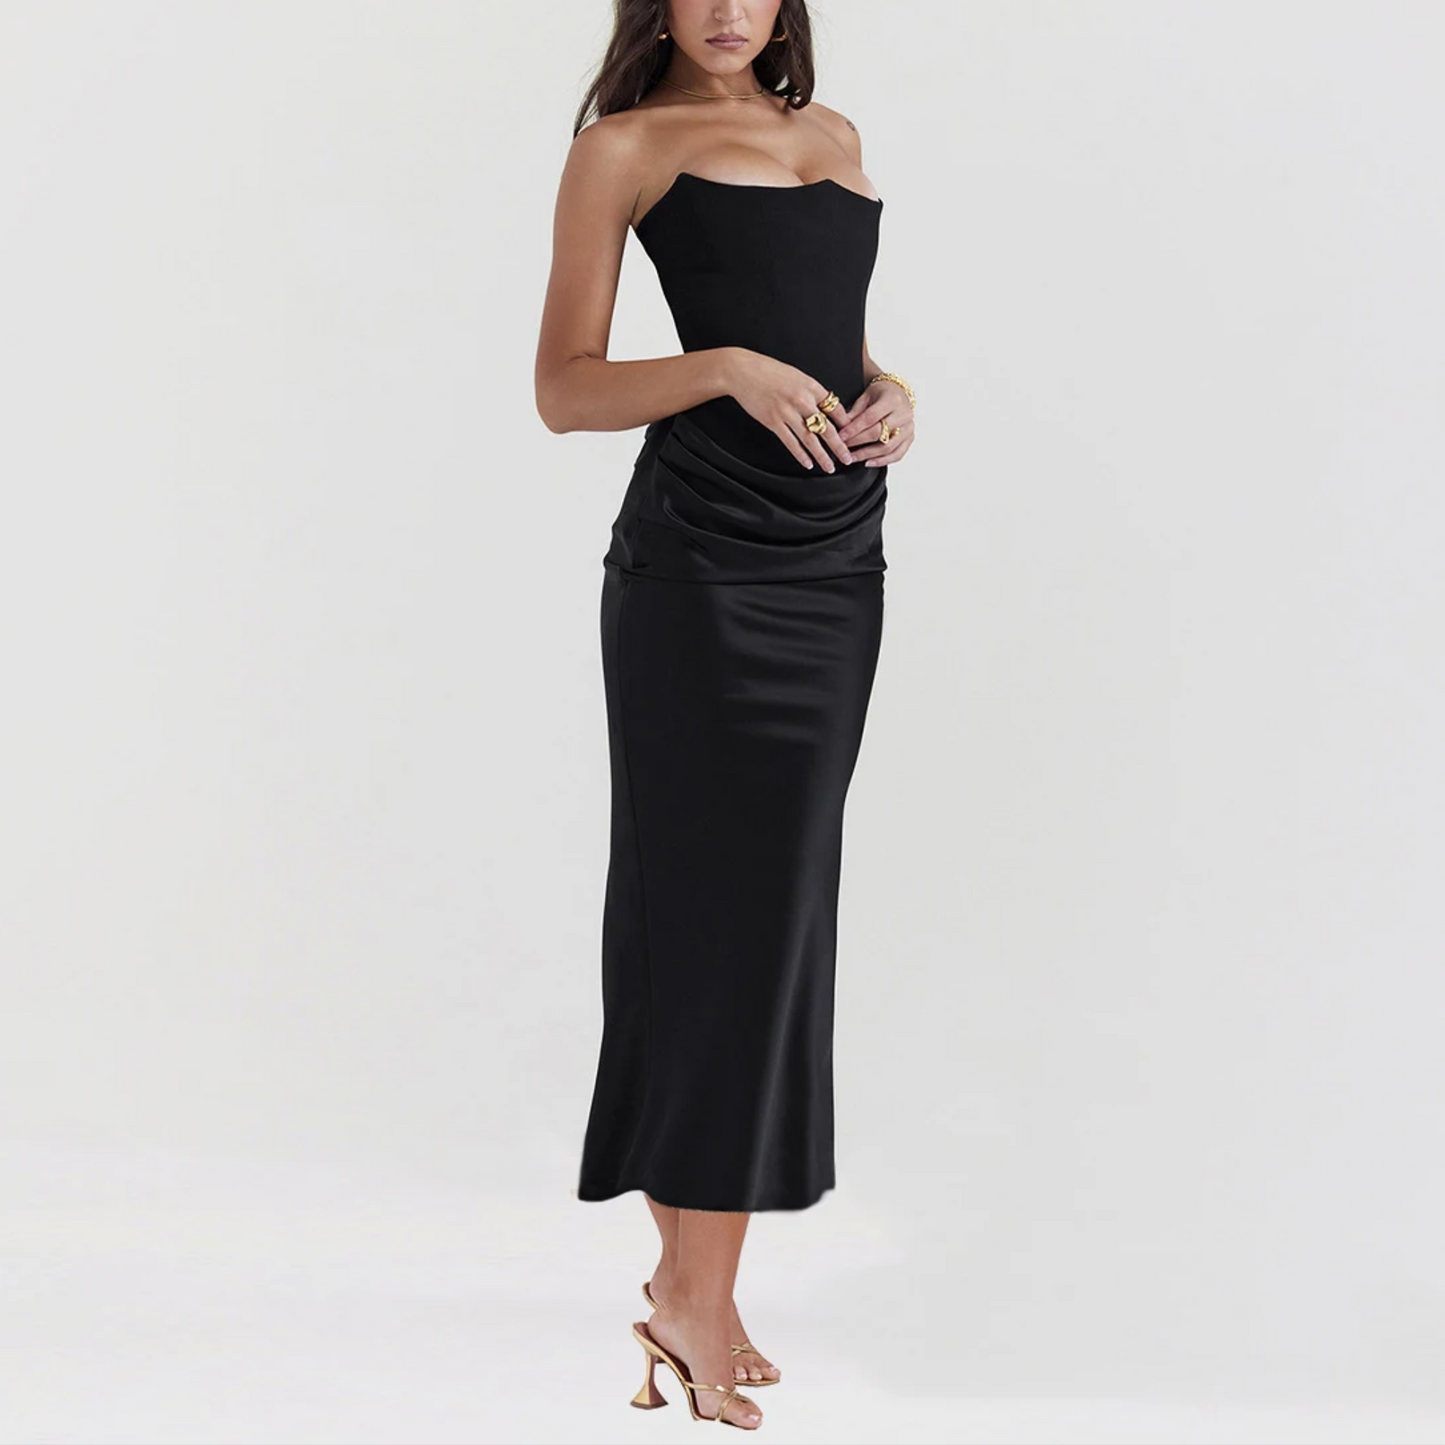 Viviana - Black Strapless Velvet Corset & Satin Bodycon Dress